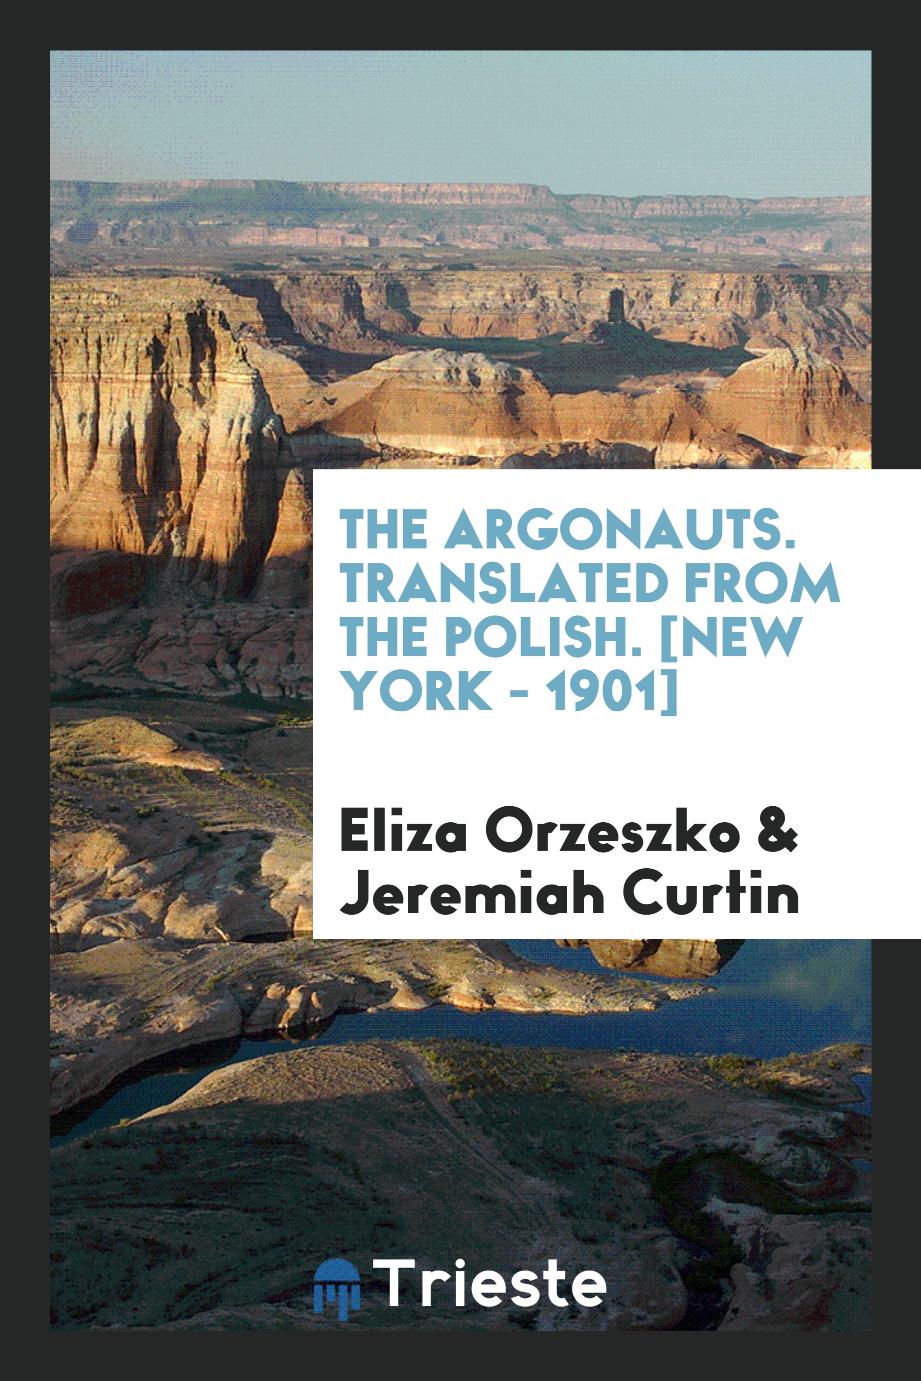 The Argonauts. Translated from the Polish. [New York - 1901]